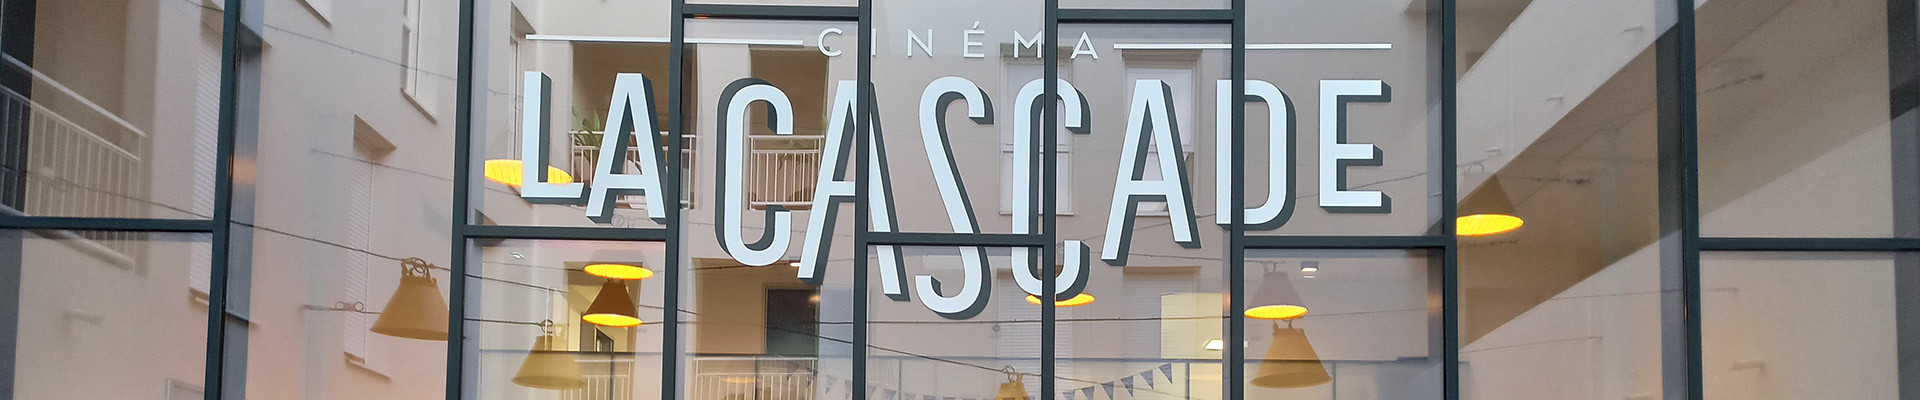 Cinema La Cascade Martigues